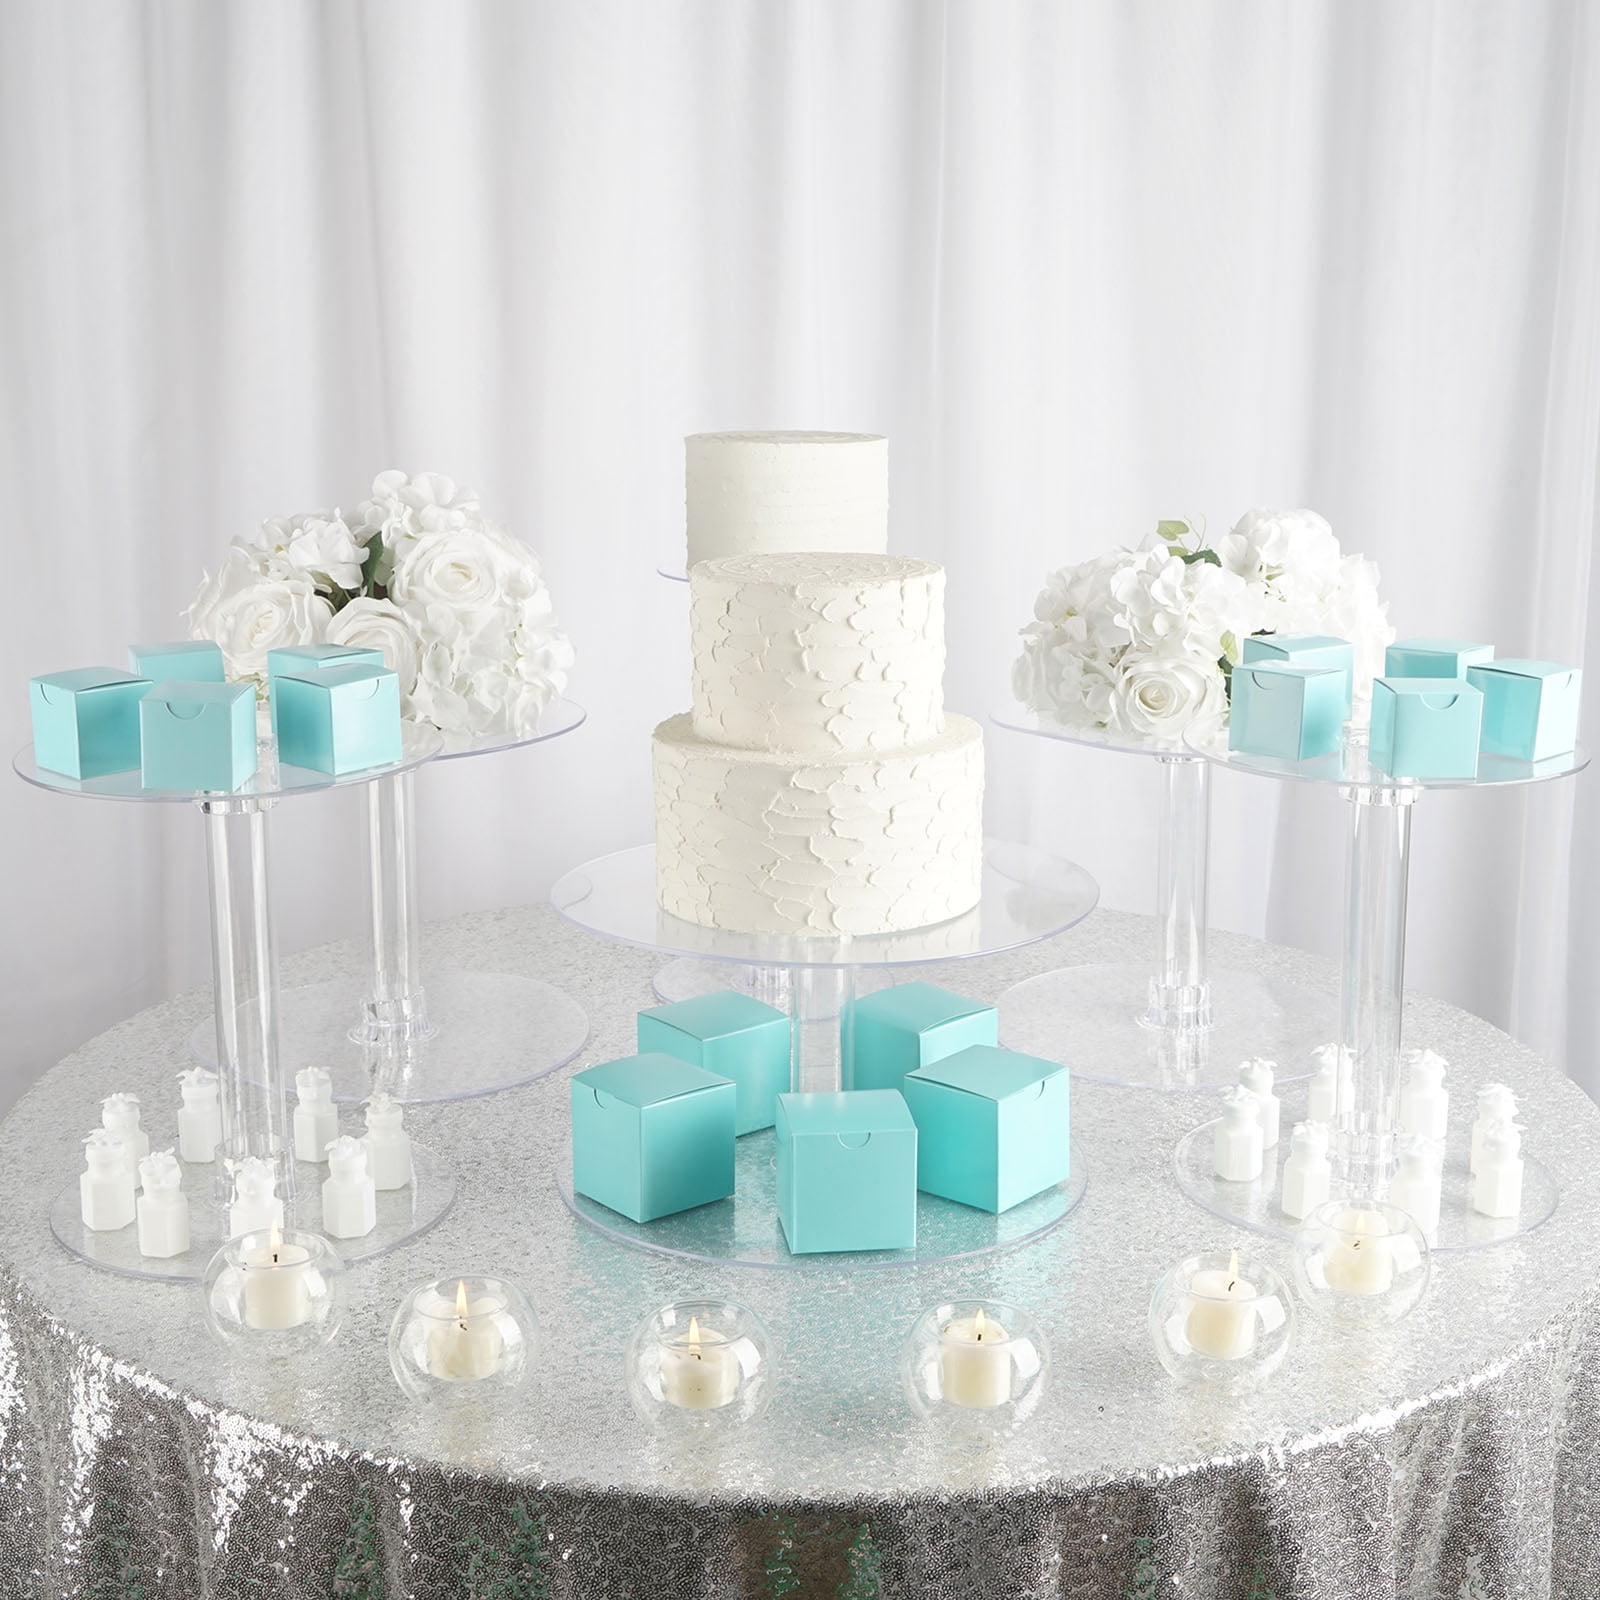 10" White Cake Stand Cupcake Holder Dessert Display Wedding Birthday Party Decor 